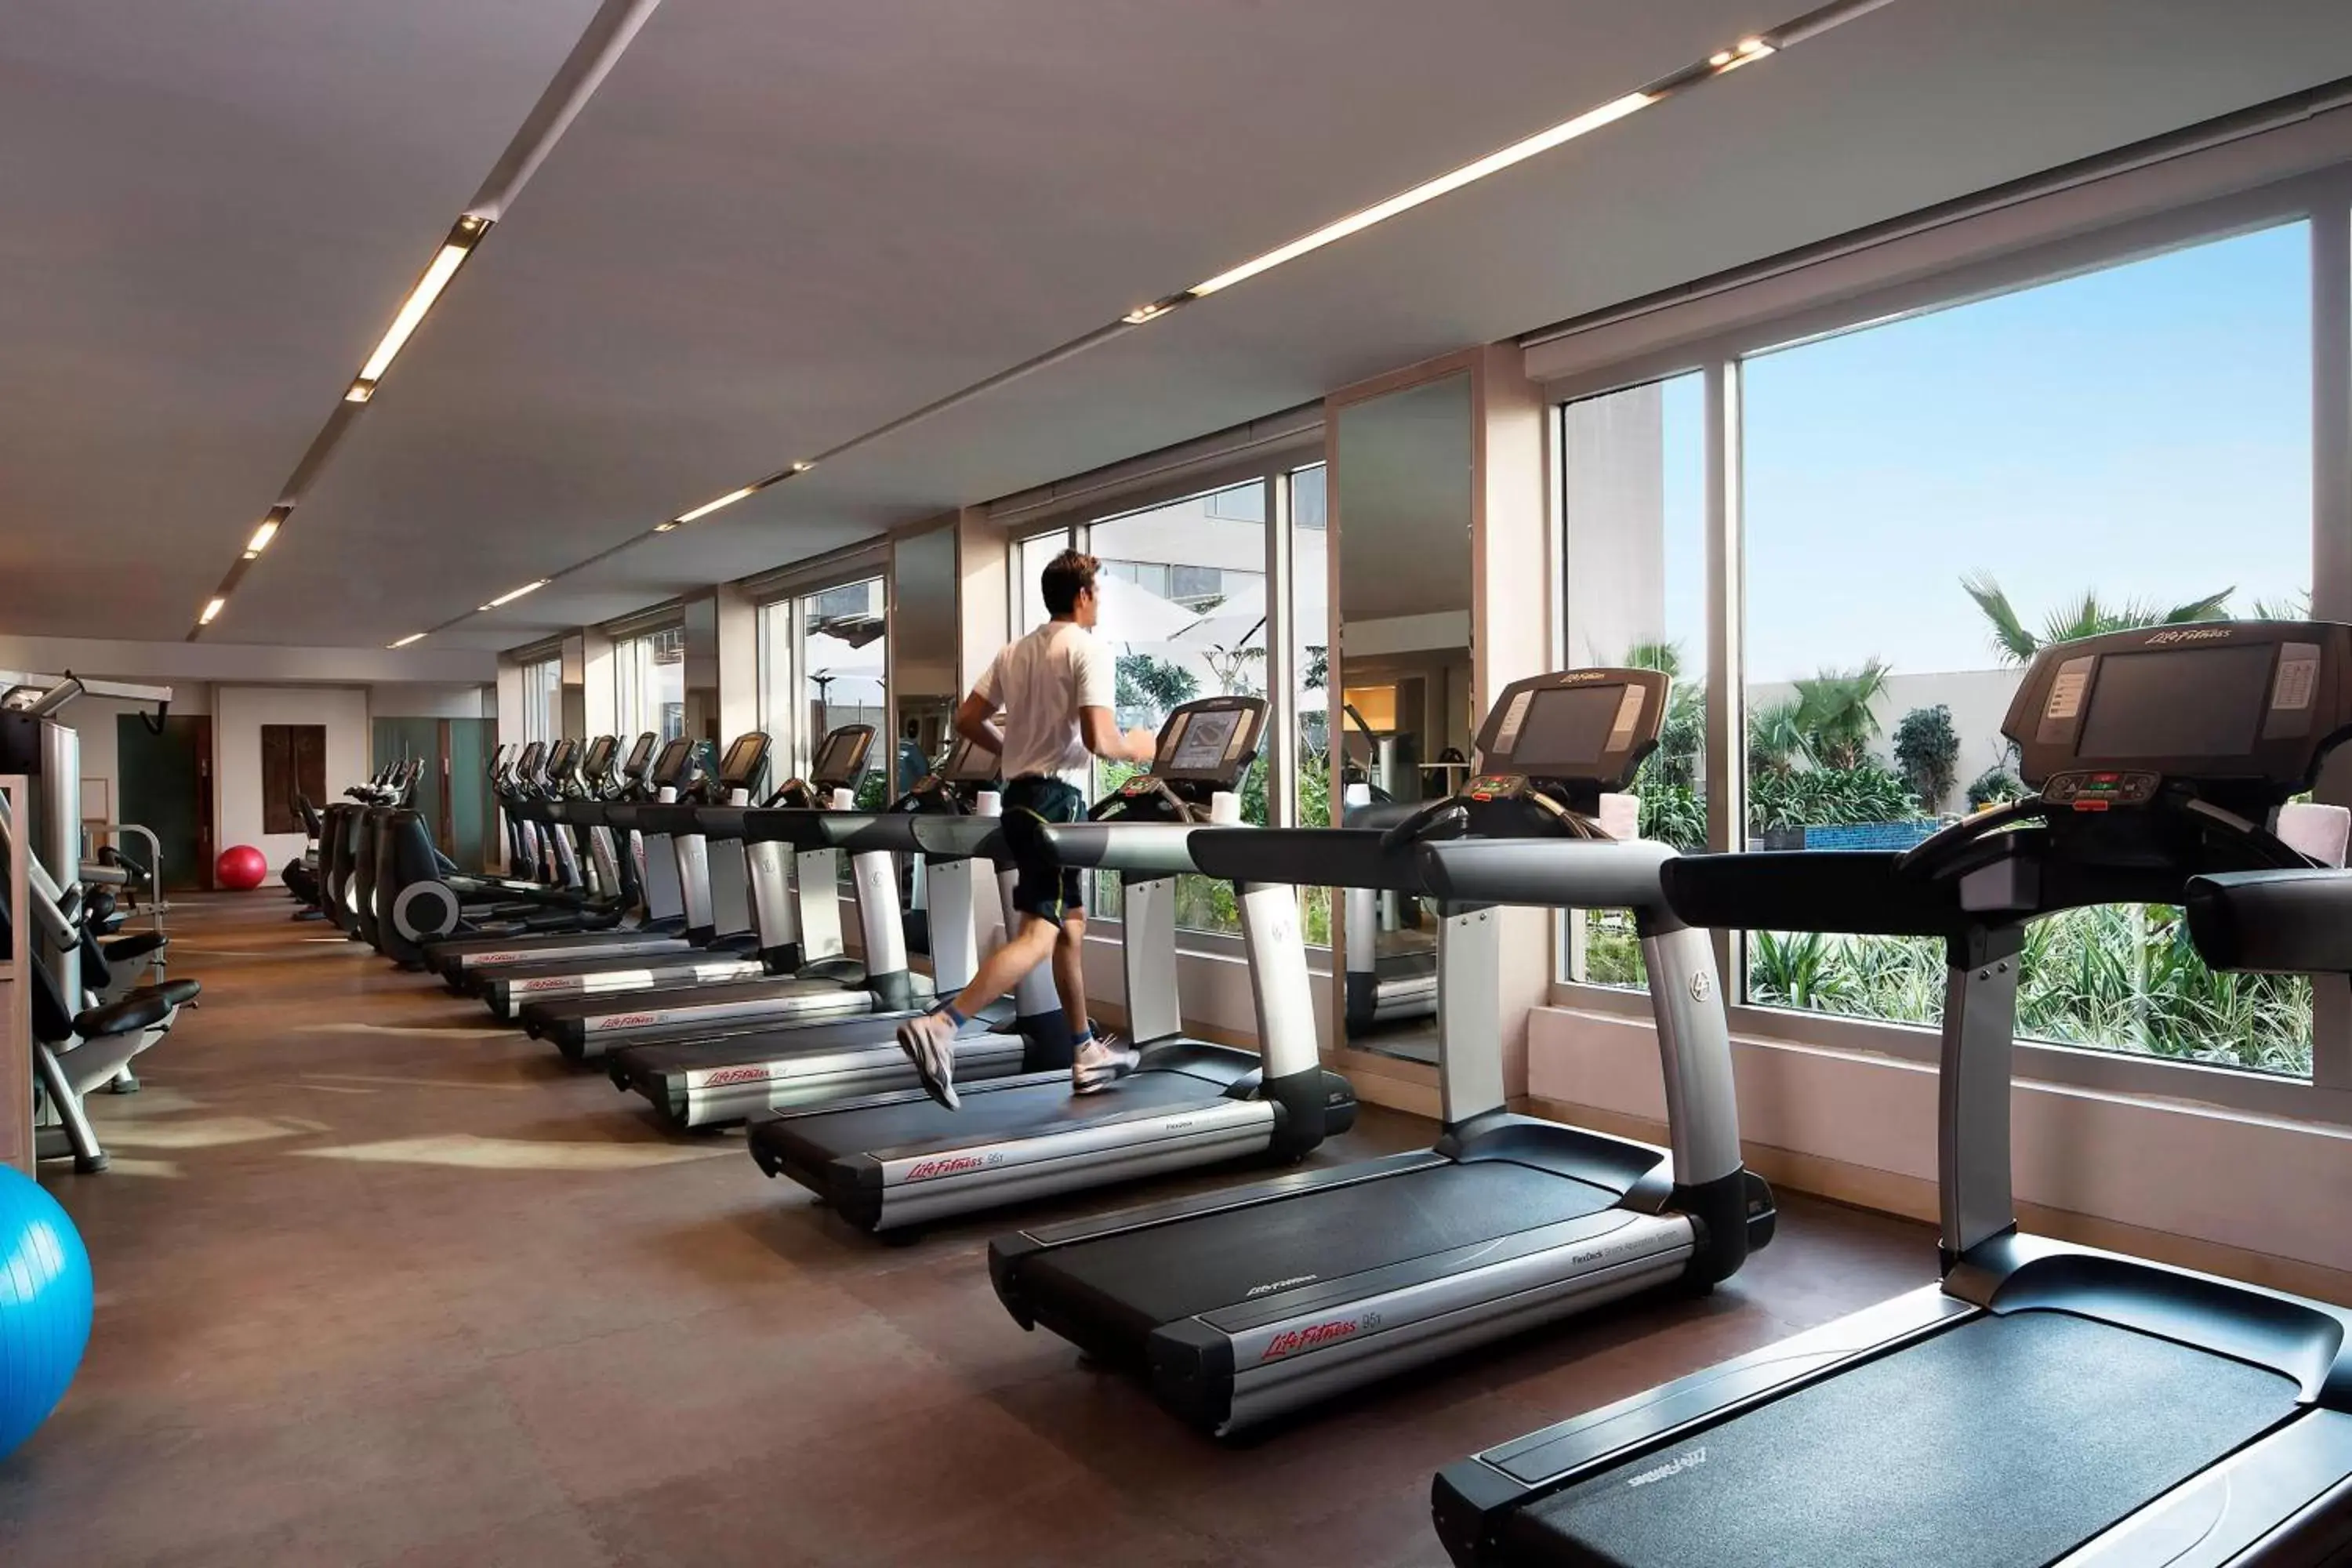 Fitness centre/facilities, Fitness Center/Facilities in JW Marriott Hotel New Delhi Aerocity